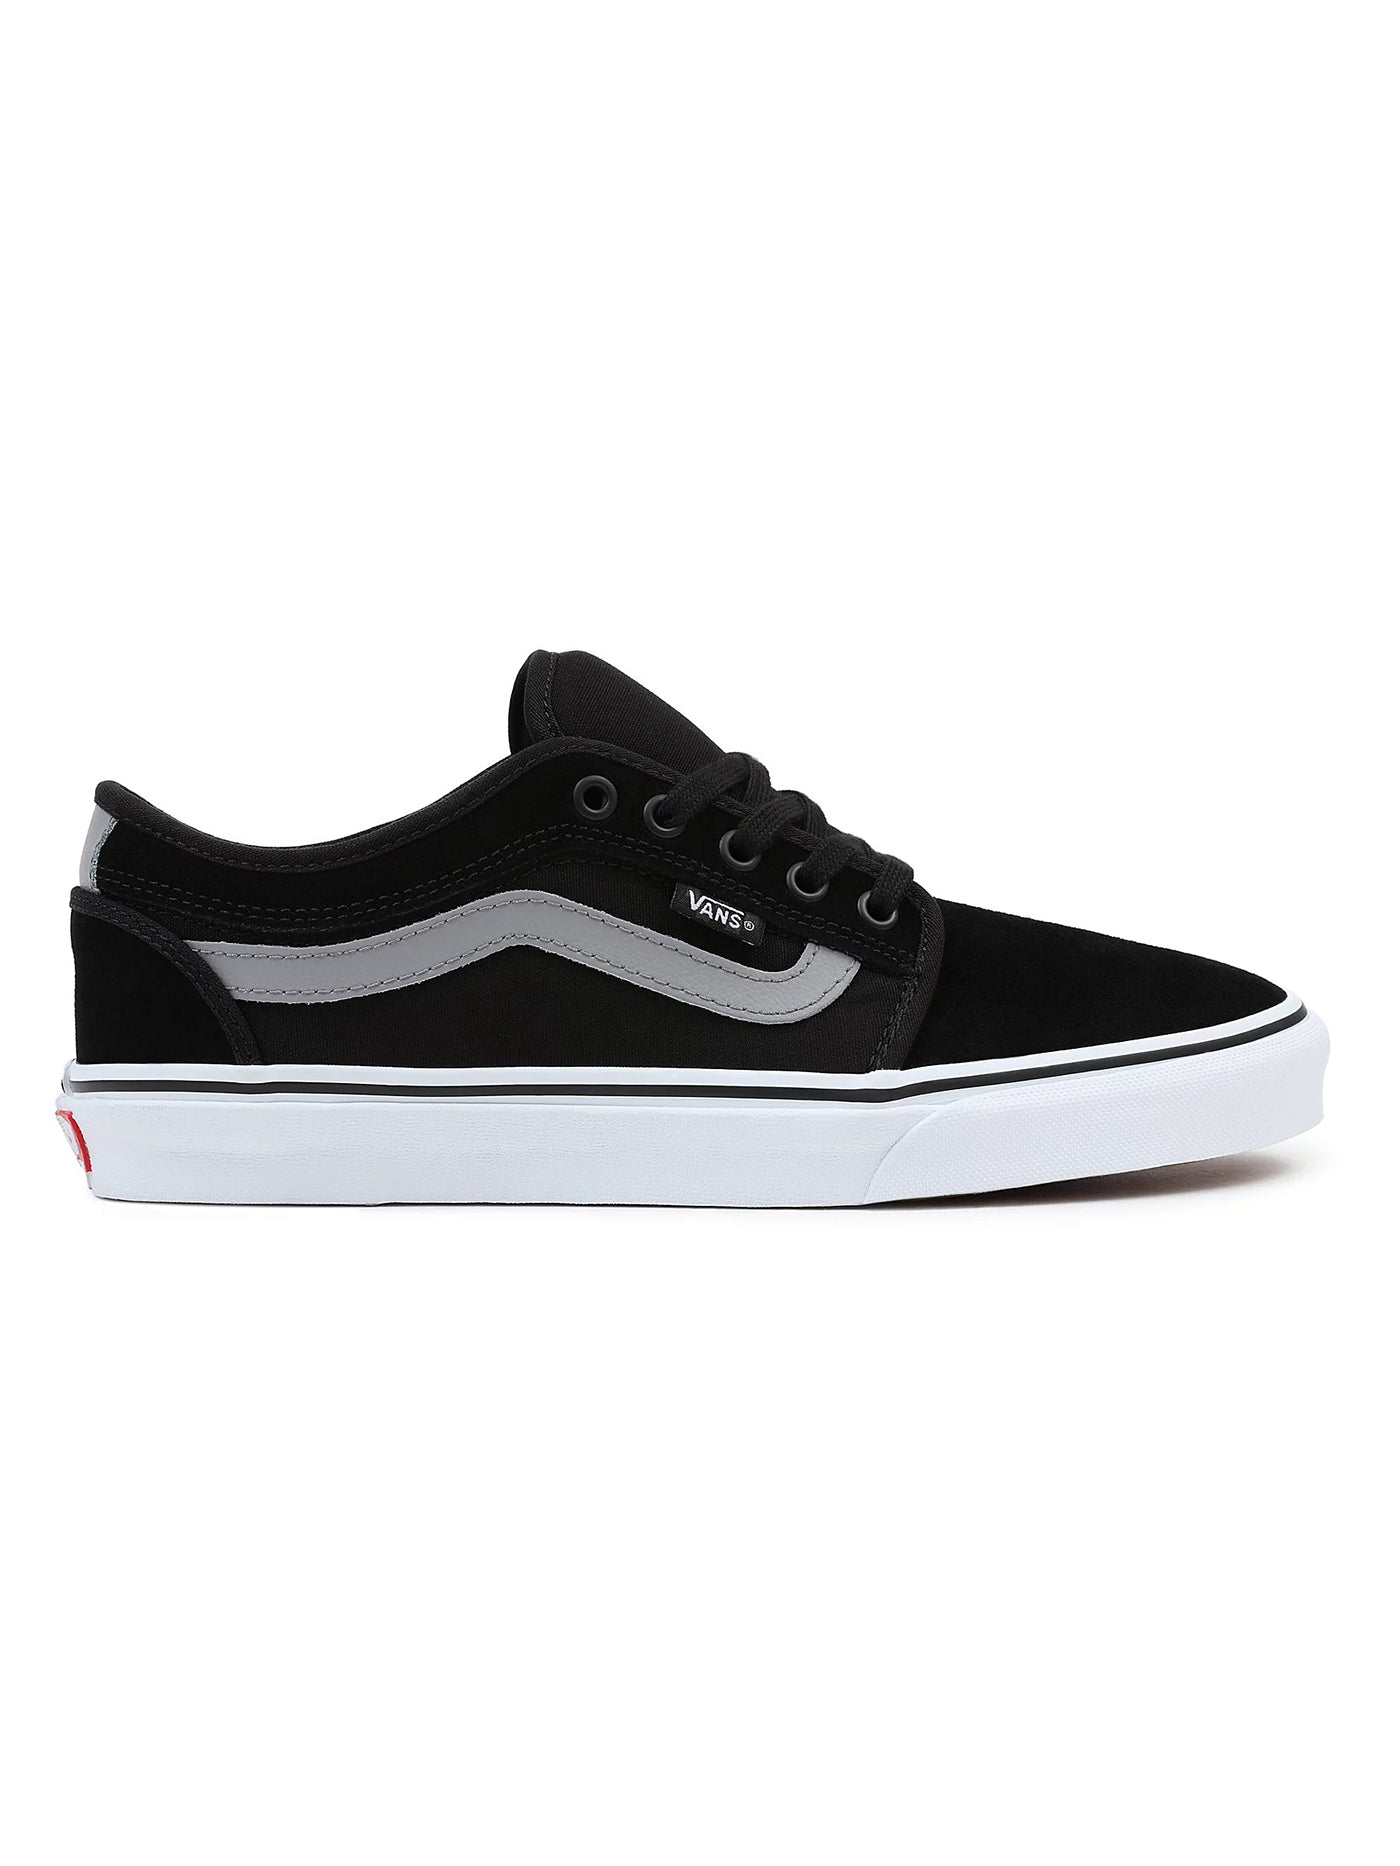 Vans Chukka Low Sidestripe Black/Grey/White Shoes